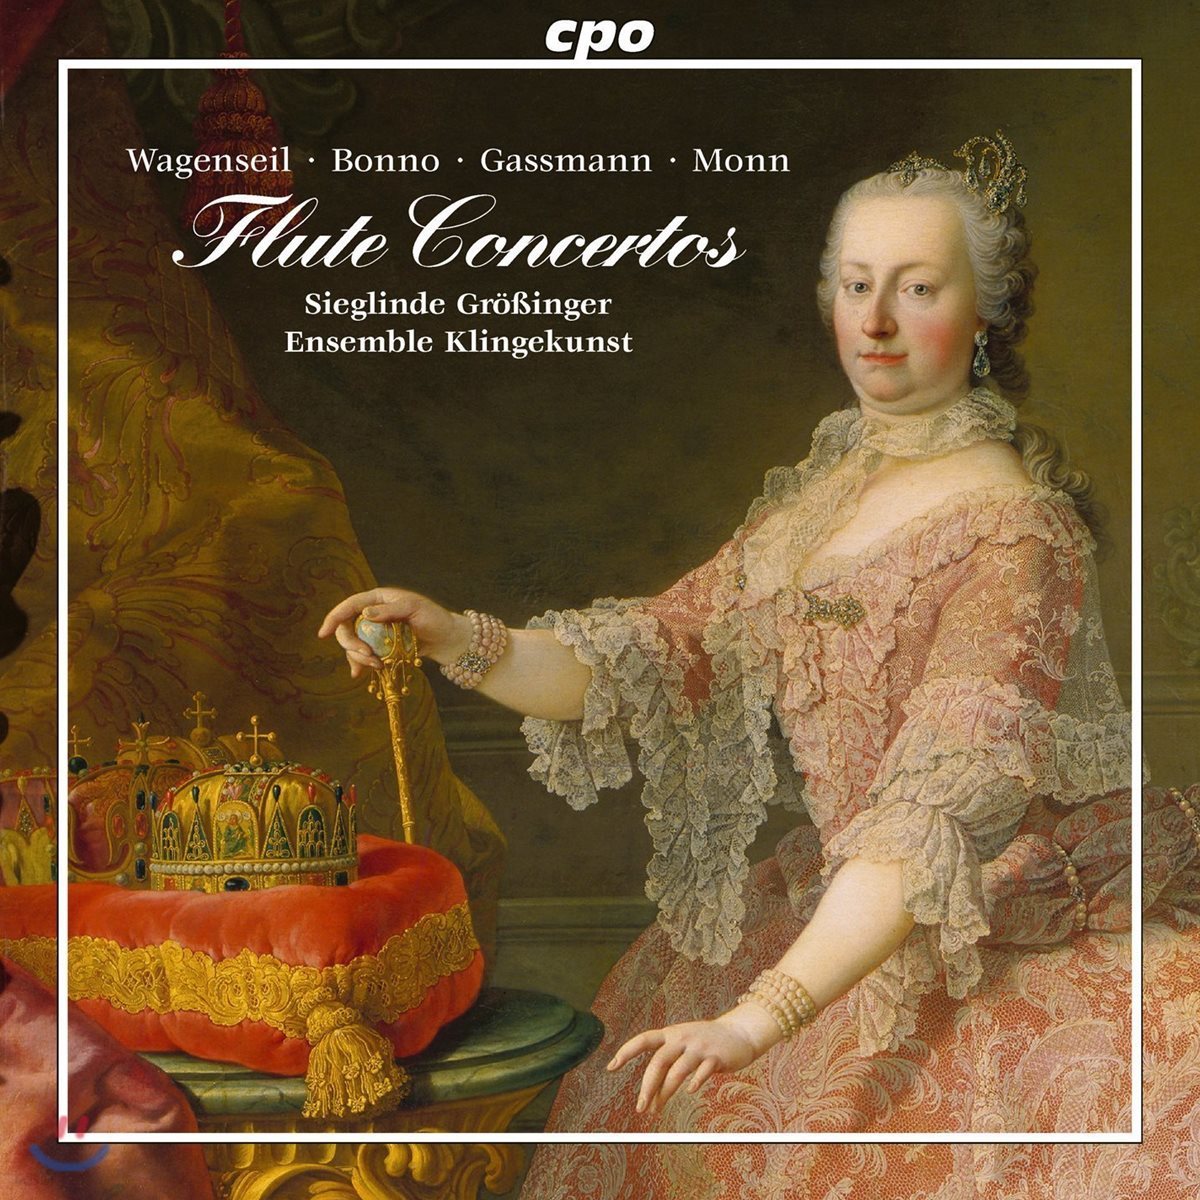 Sieglinde Grossinger 빈 고전주의 시대의 플루트 협주곡 - 바겐자일 / 보노 / 가스만 / 몬 (Flute Concertos from Vienna)